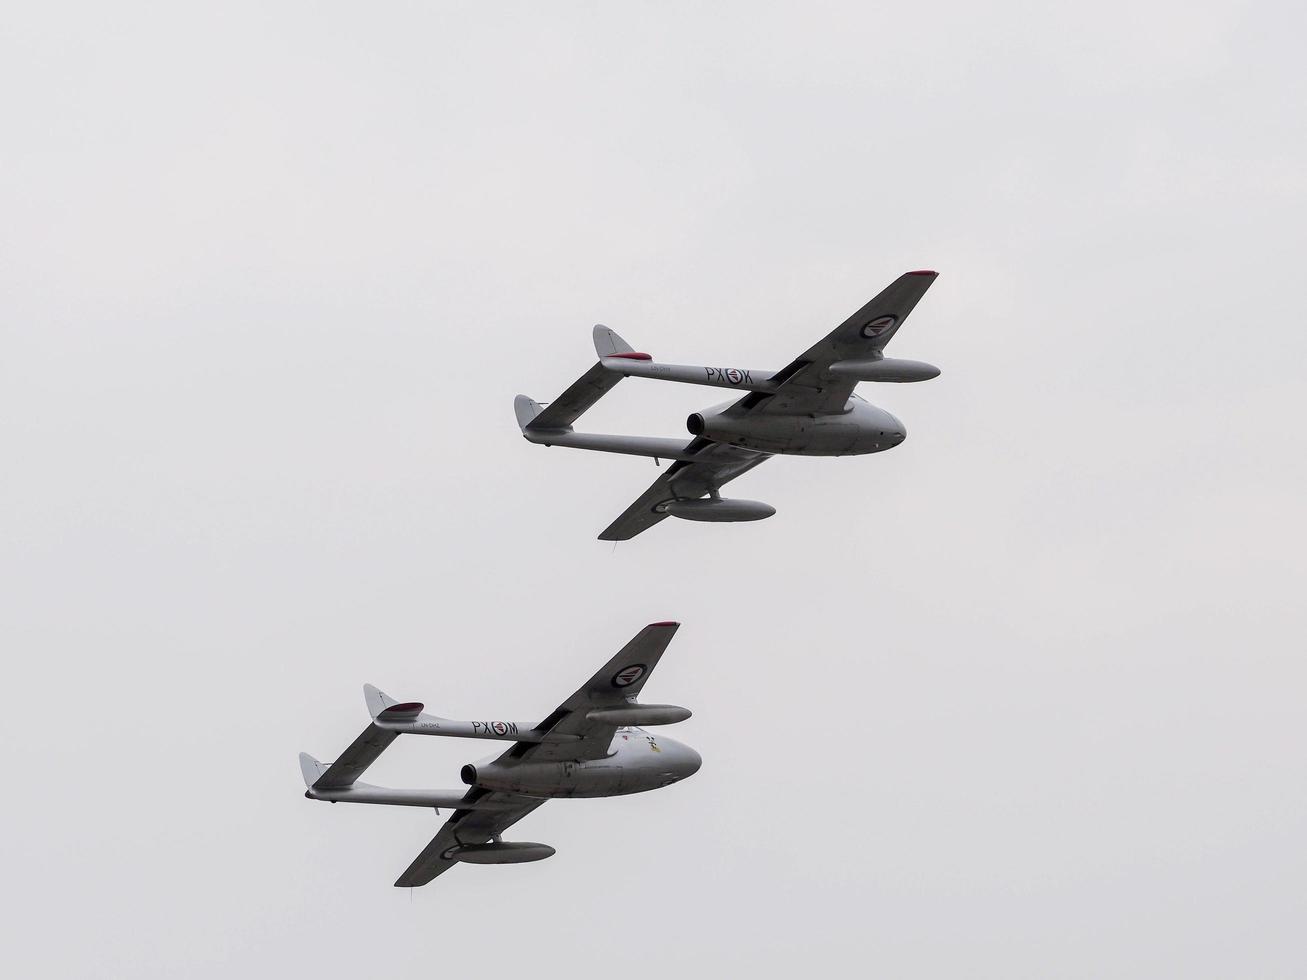 Dunsfold, Surrey, UK, 2016. Two de Havilland Vampires Circling over Dunsfold Airfield photo